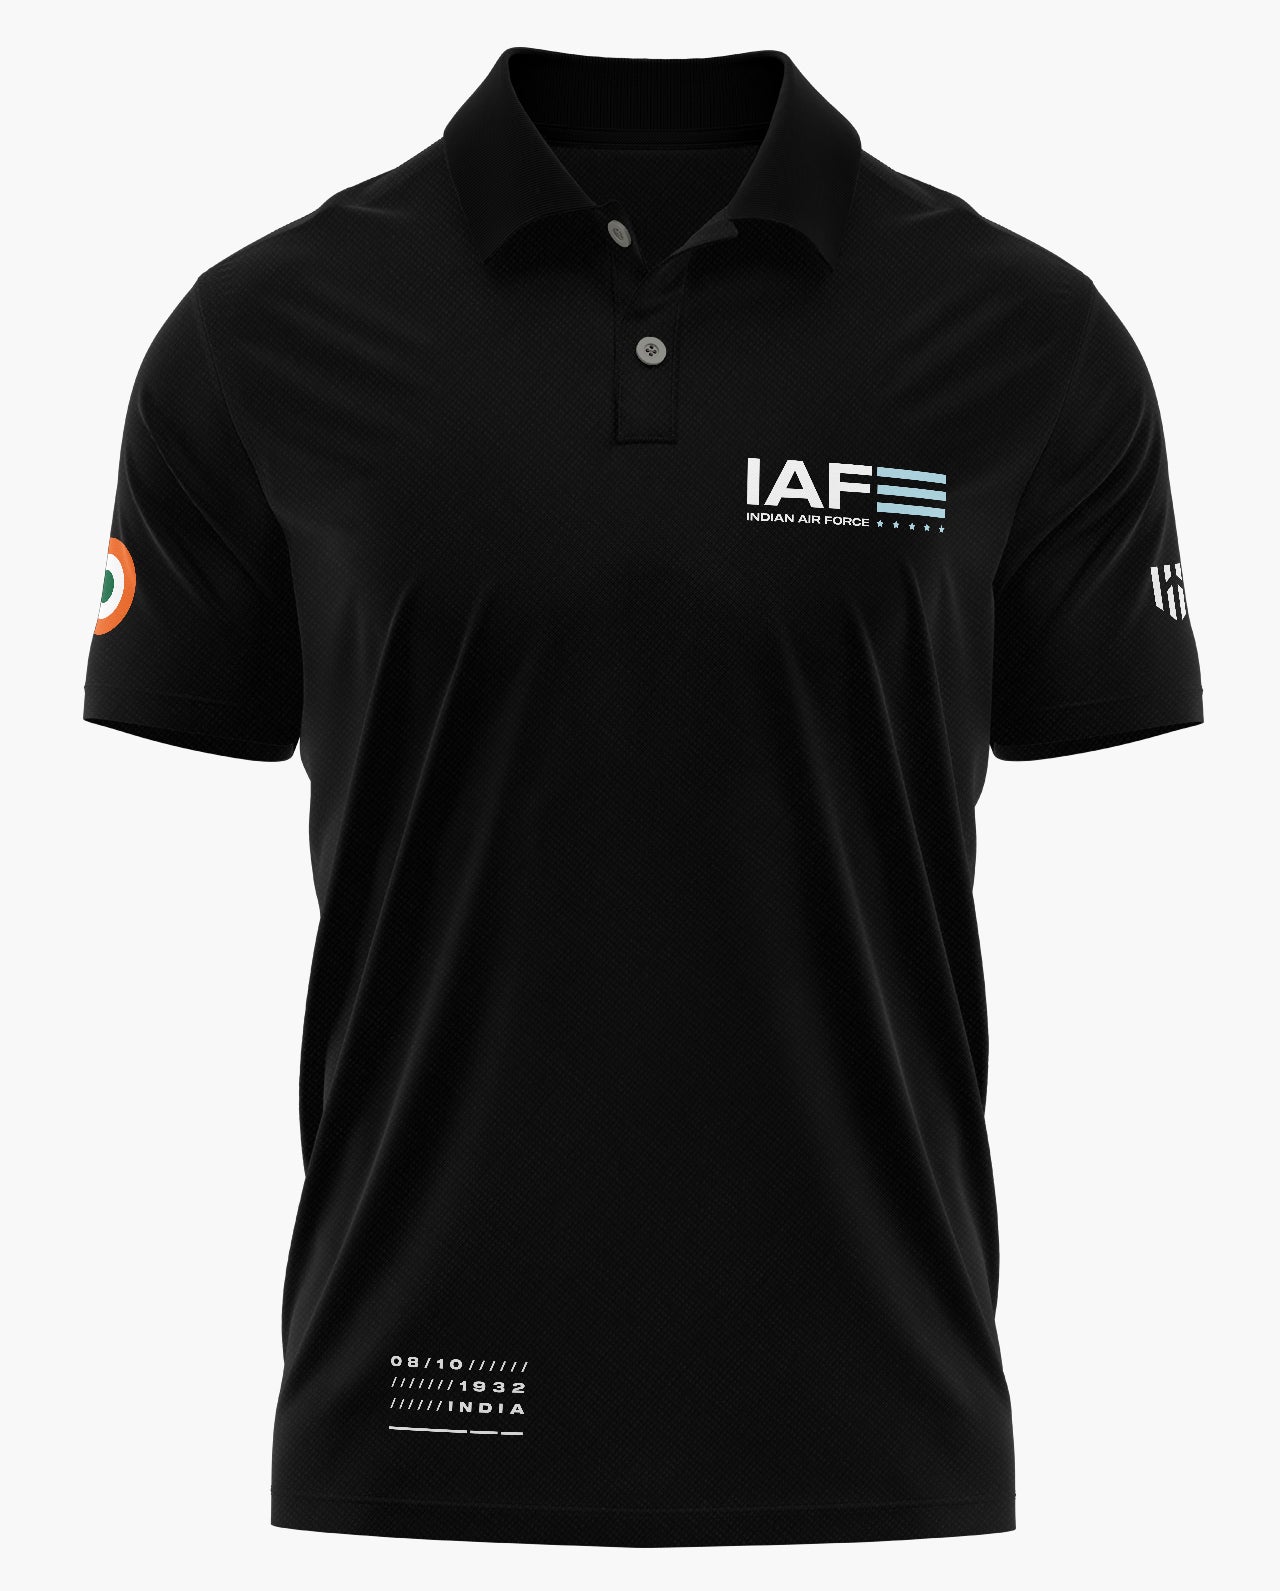 IAF Prestige Polo T-Shirt exclusive at Aero Armour